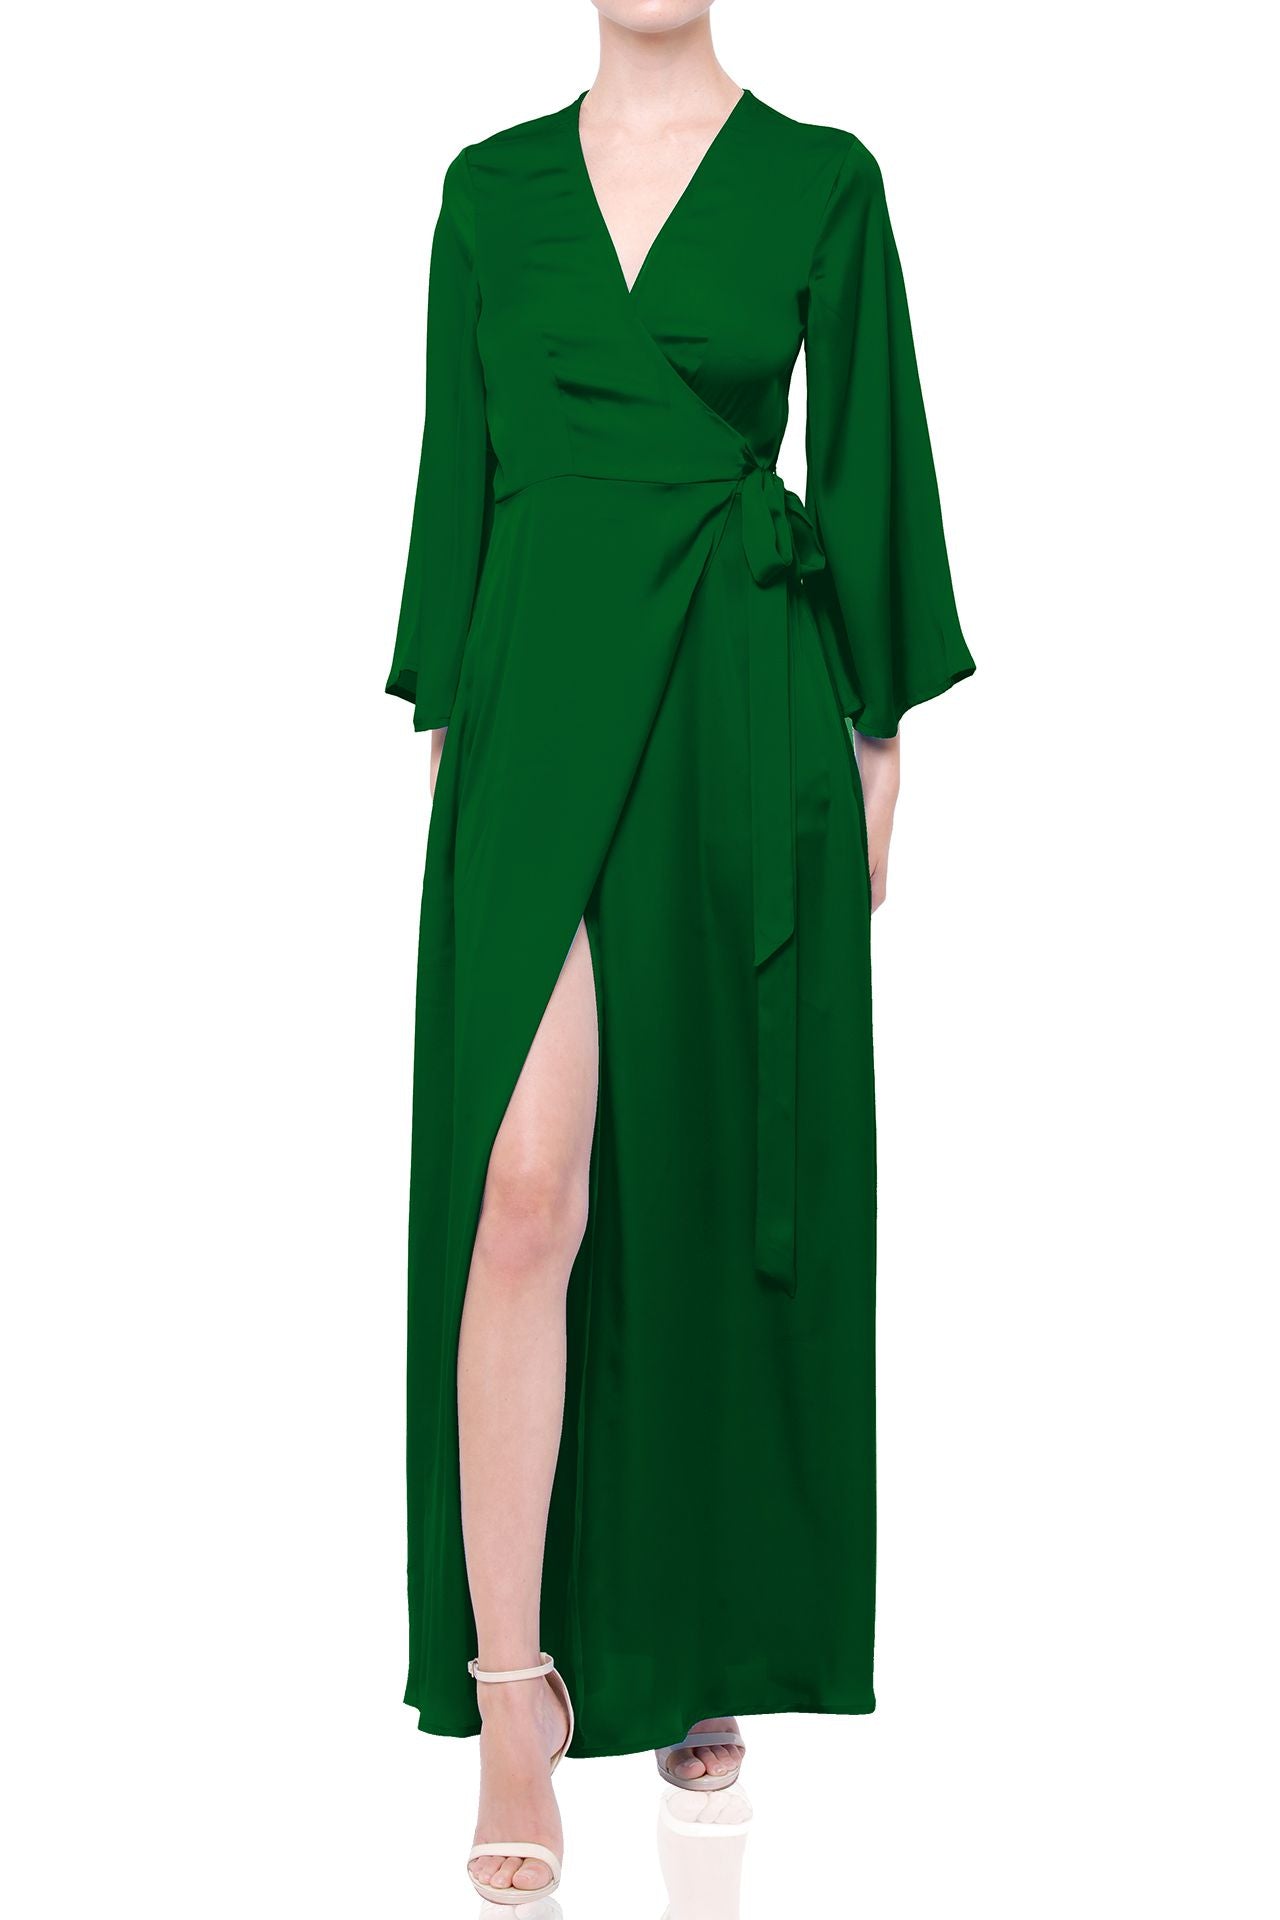 "summer wrap dress" "women's long sleeve wrap dress" "wrap maxi dress green" "Kyle X Shahida"